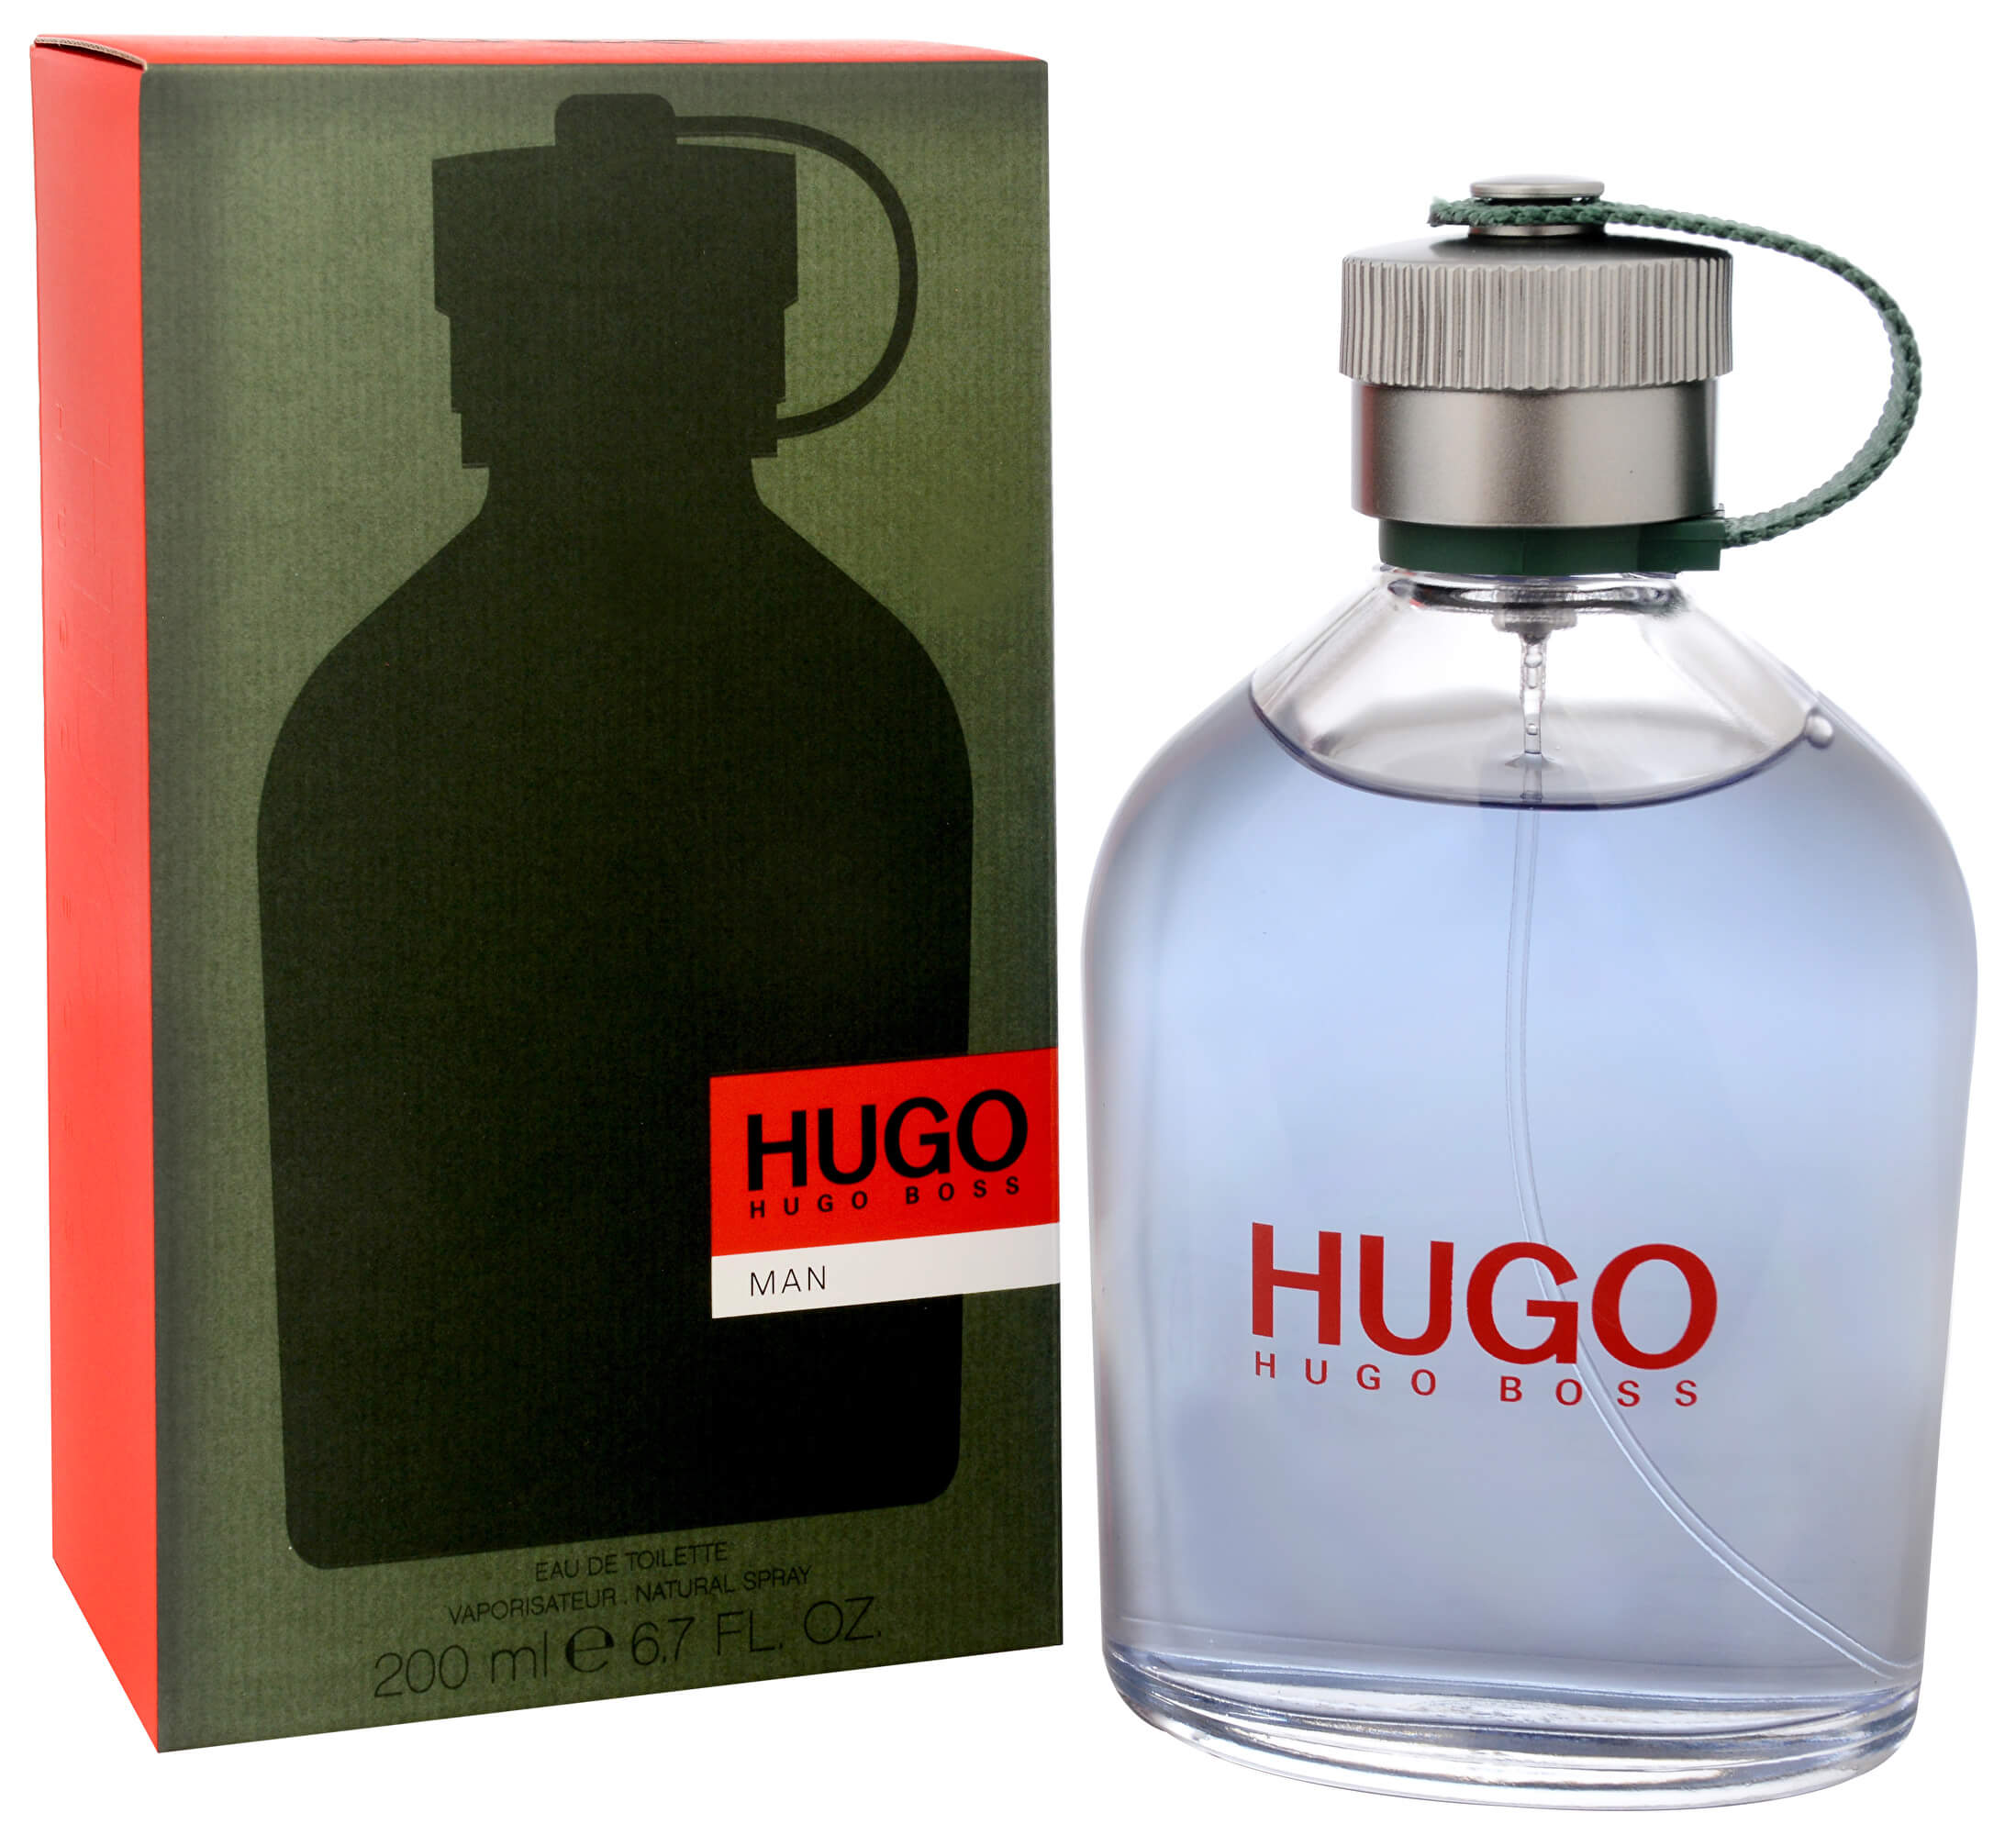 Hugo страна. Hugo Boss eu de Toilette. Hugo Boss 200 мл. Туалетная вода Hugo Boss Hugo Art Limited Edition. Парфюмерная вода Hugo Boss Hugo create Limited Edition.